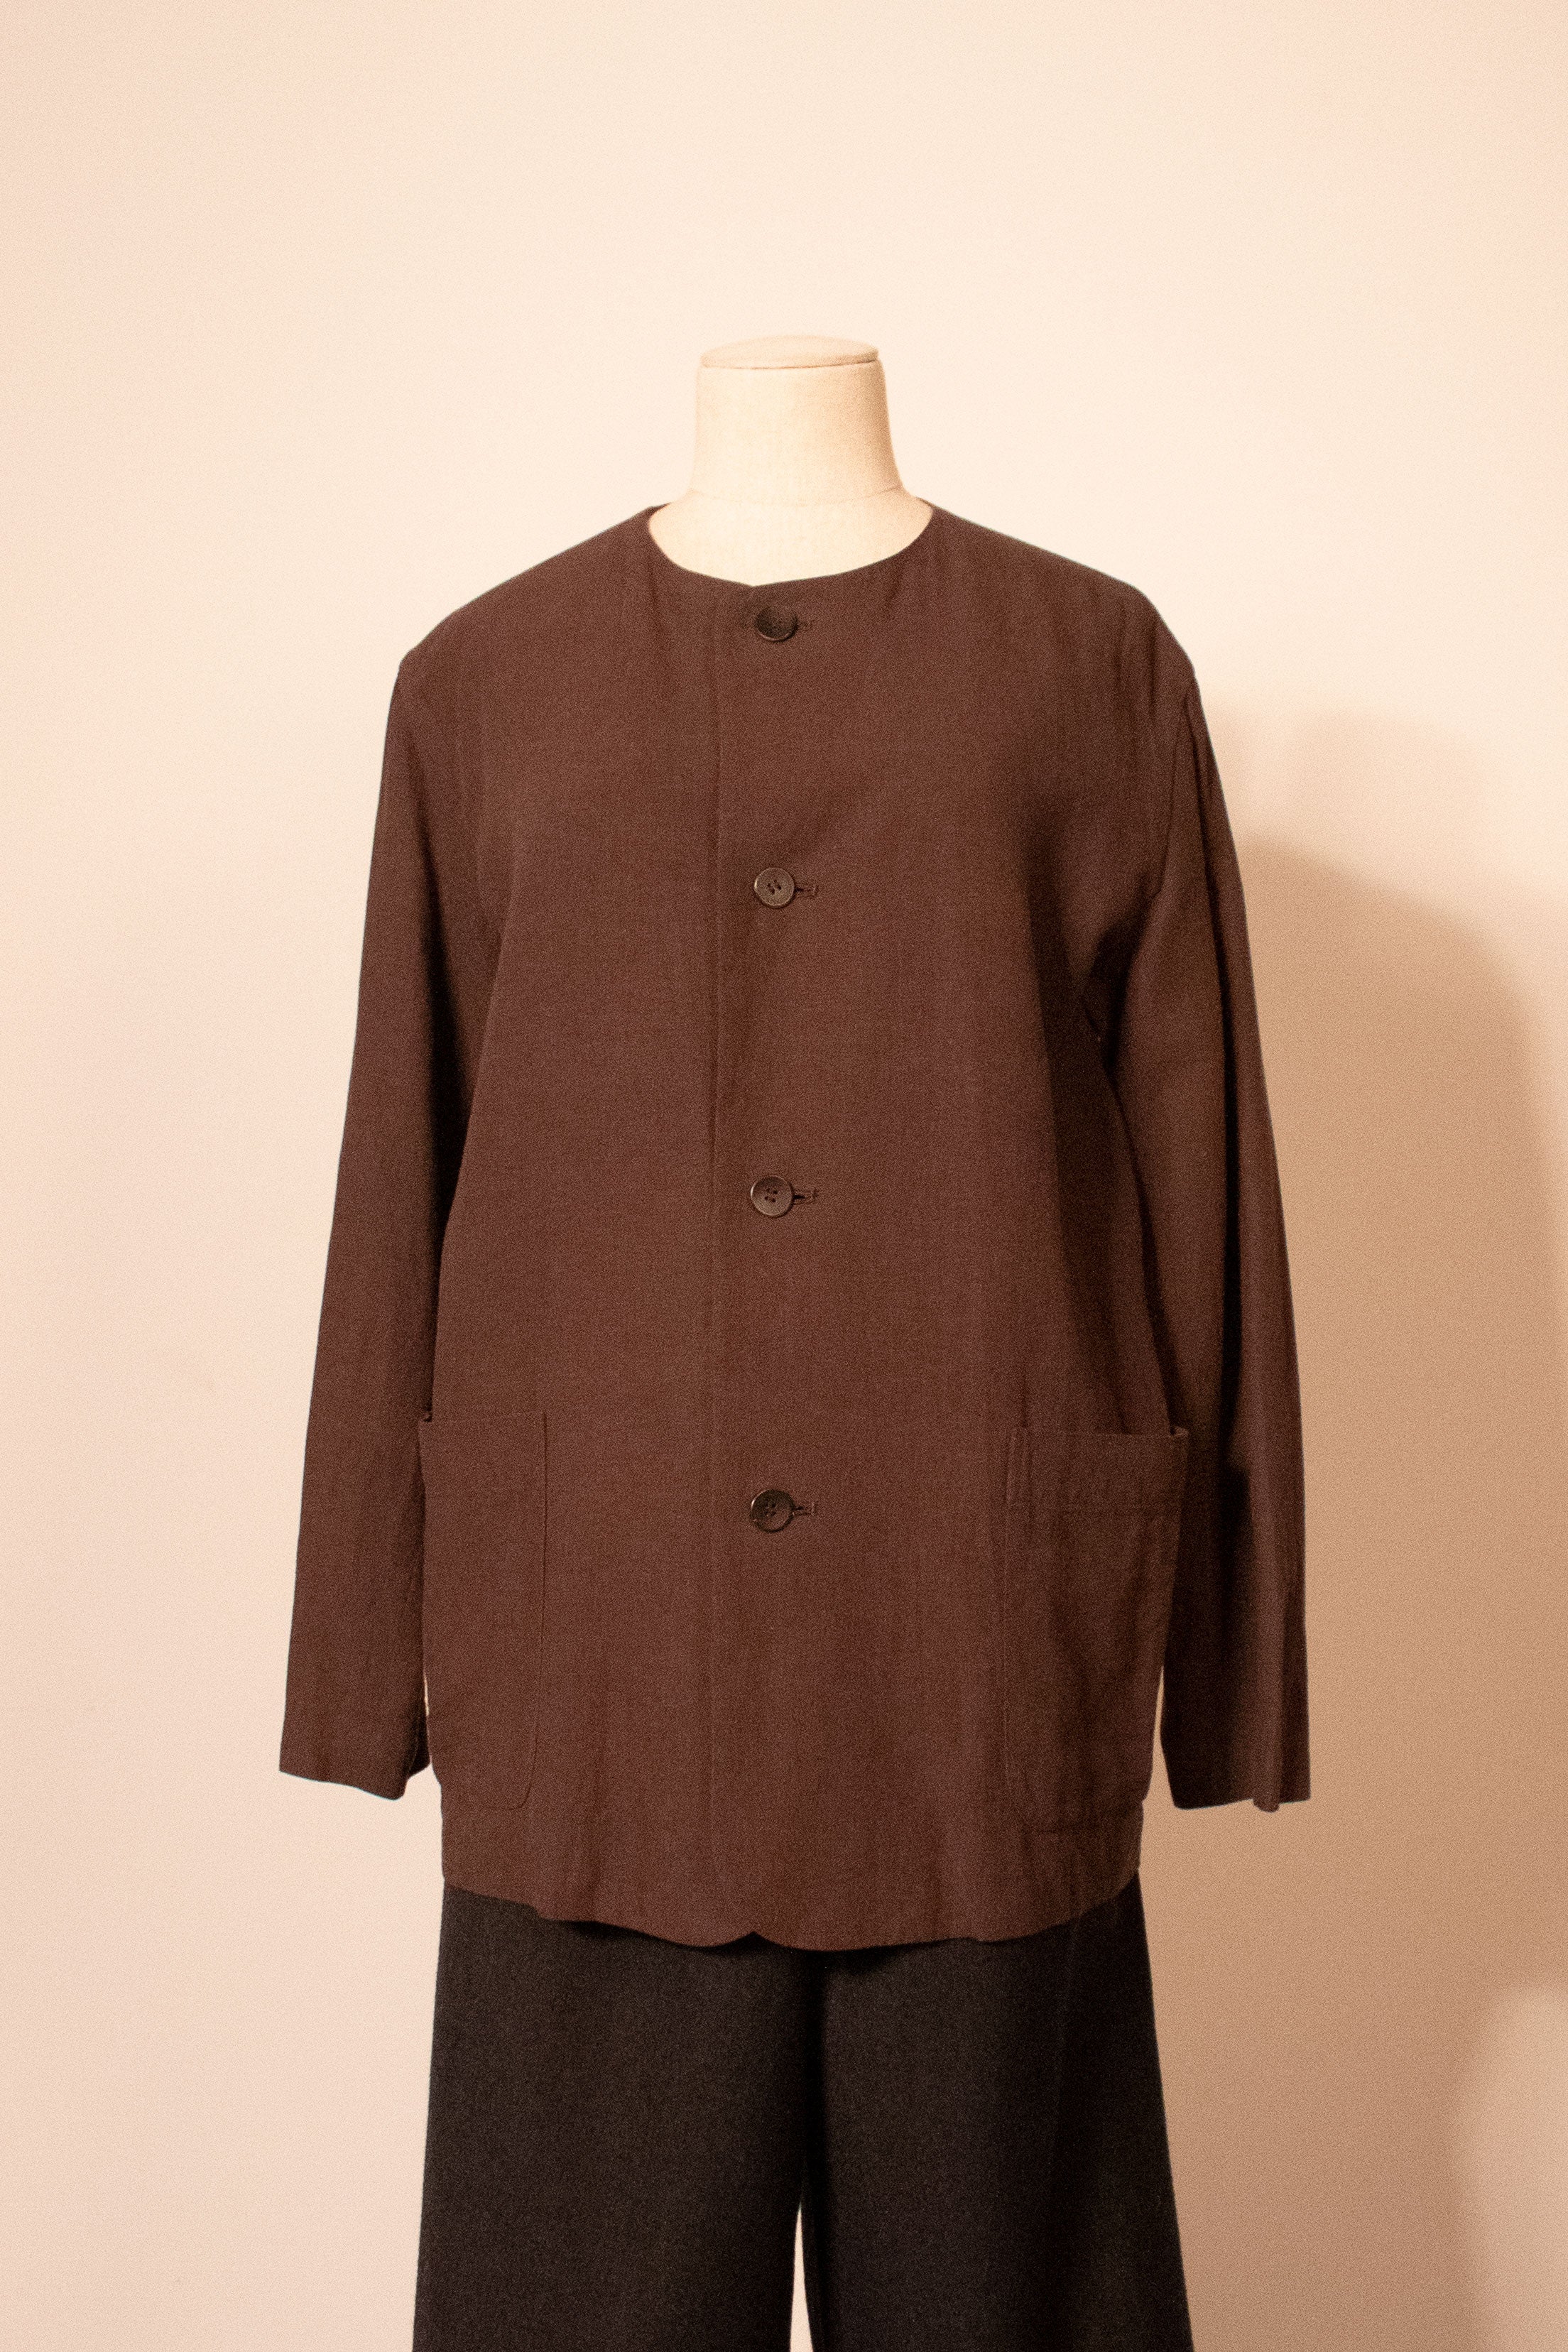 Miyake Plantation brown linen 2-pocket jacket